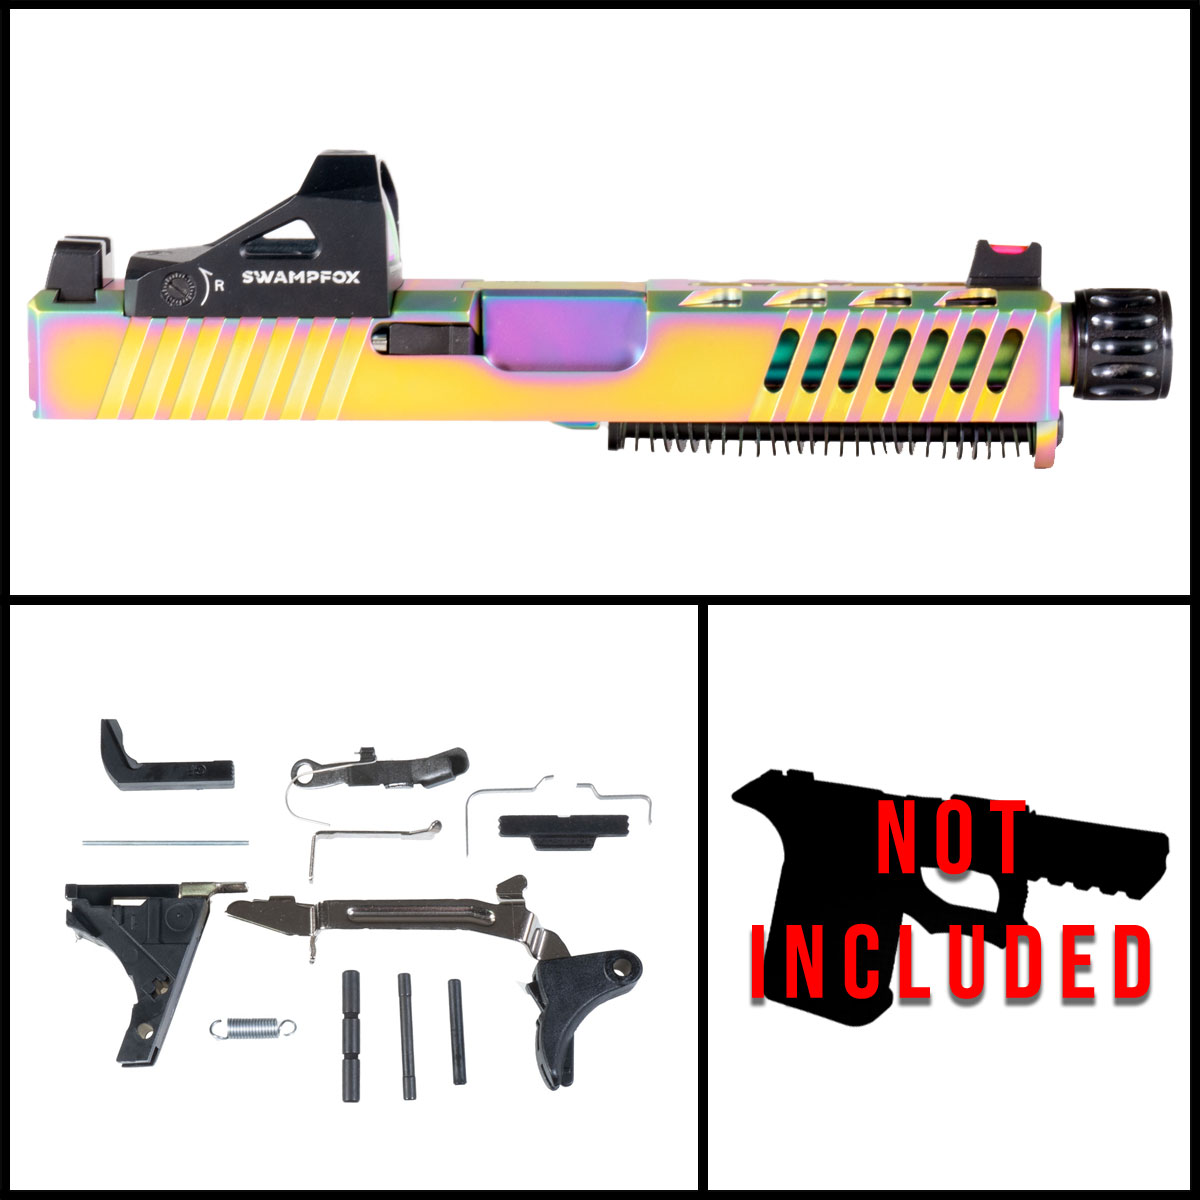 DD 'Lumina w/ Swampfox Justice RMR' 9mm Full Pistol Build Kits (Everything Minus Frame) - Glock 19 Gen 1-2 Compatible